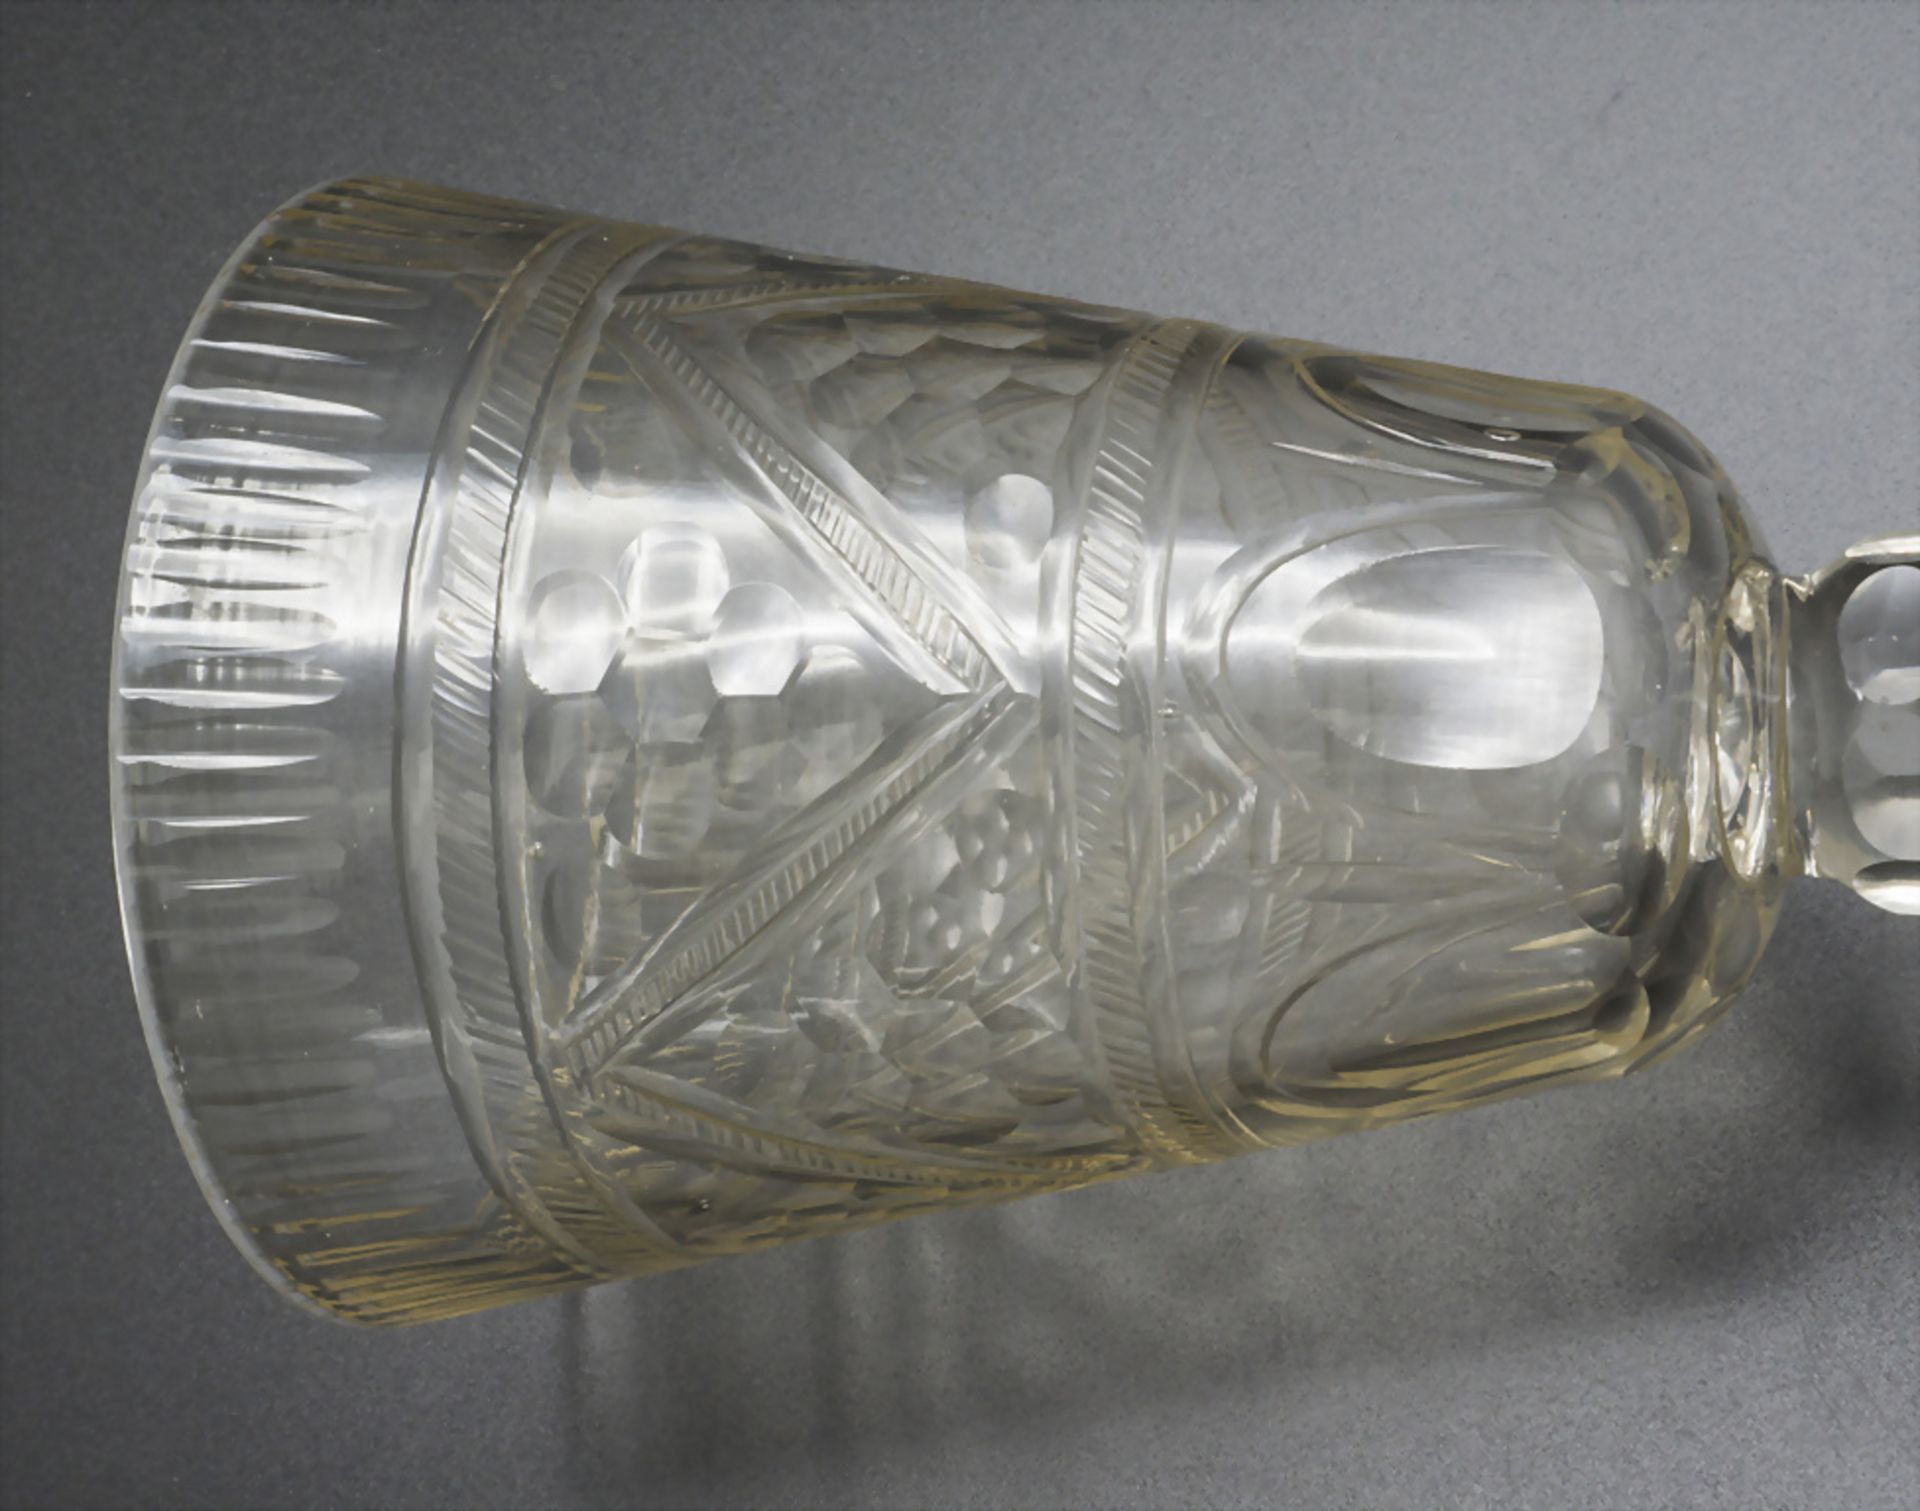 Pokalglas / A cup glass, 18./19. Jh. - Bild 4 aus 5